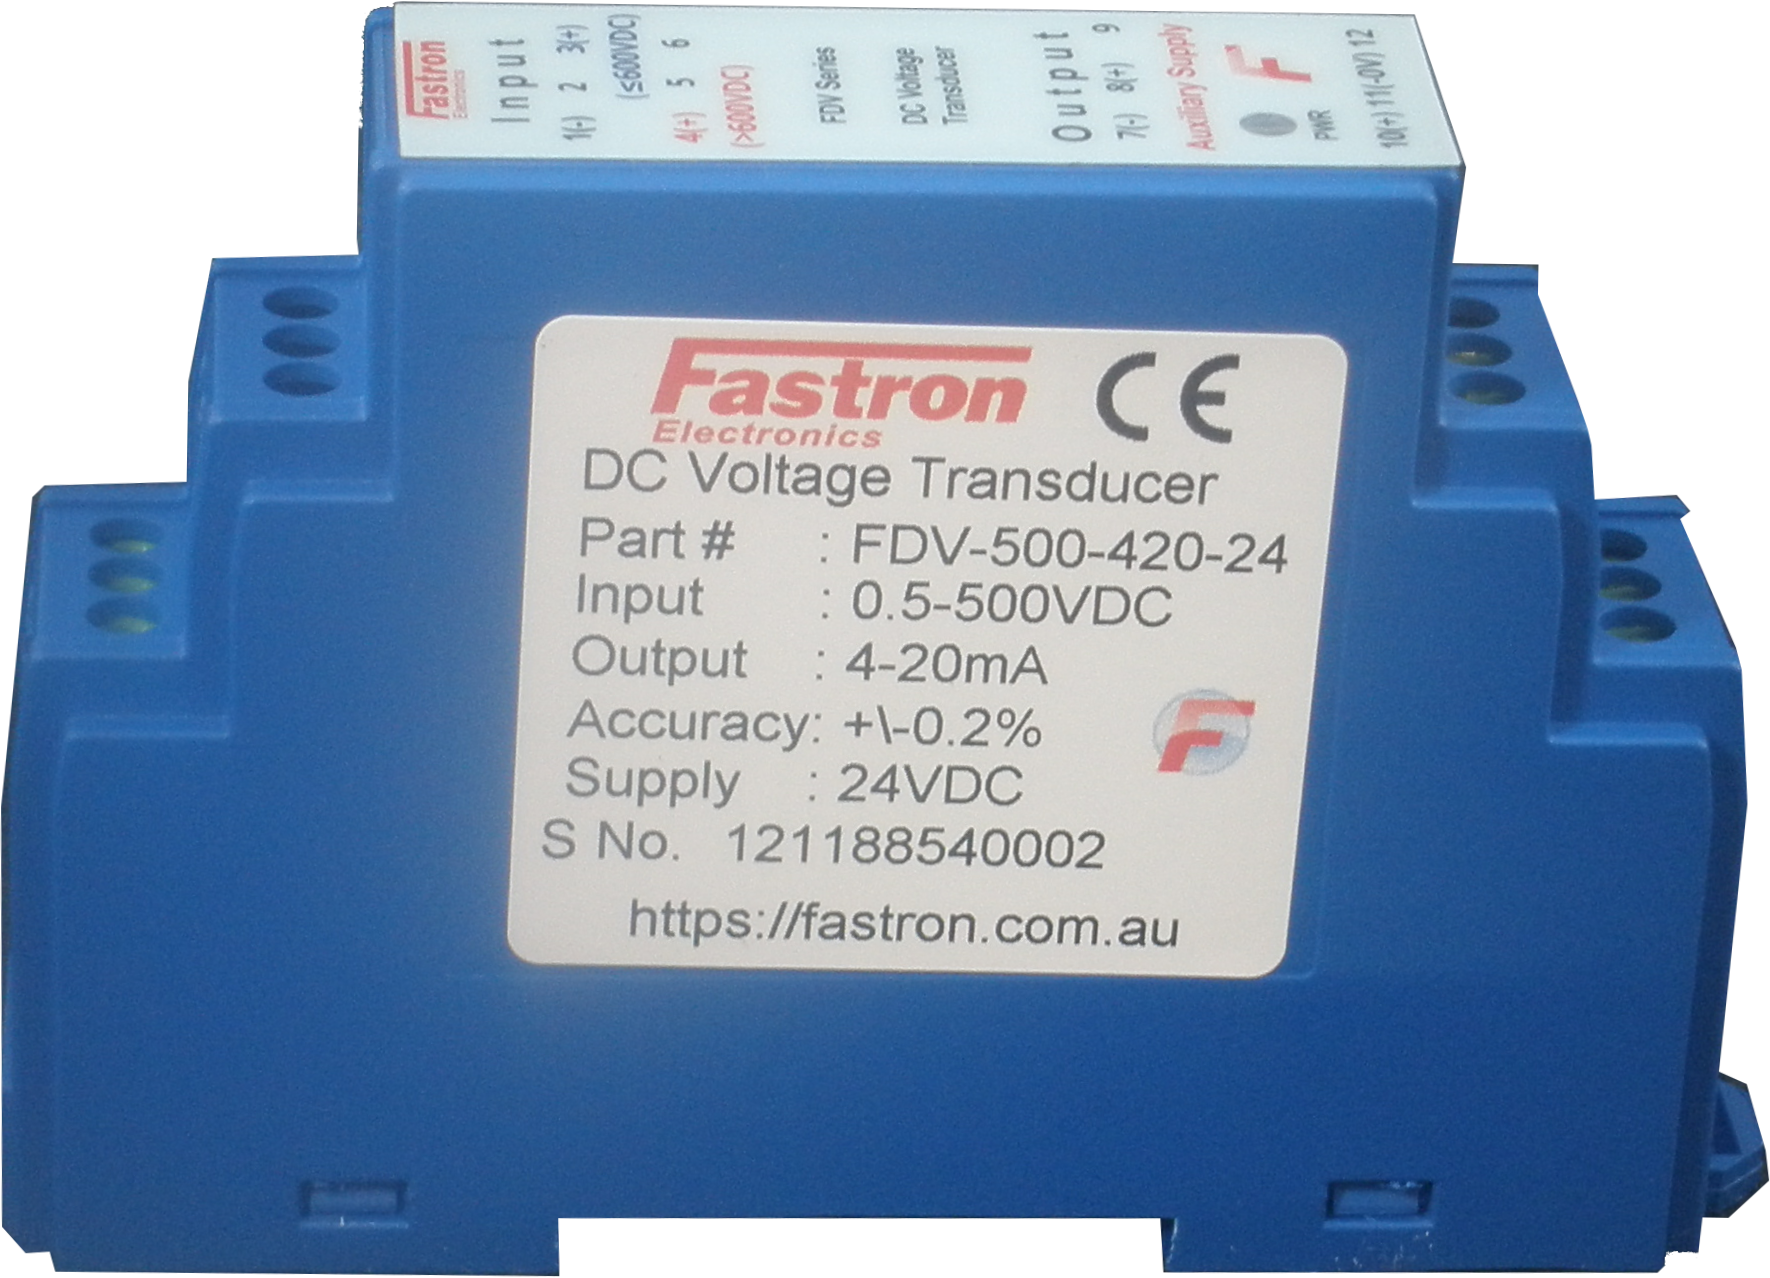 FDV-150-420-24, DC Voltage Transducer, Din Rail Mount, 0-150VDC, 4-20mA output, 24VDC Supply Voltage, 150mS Response